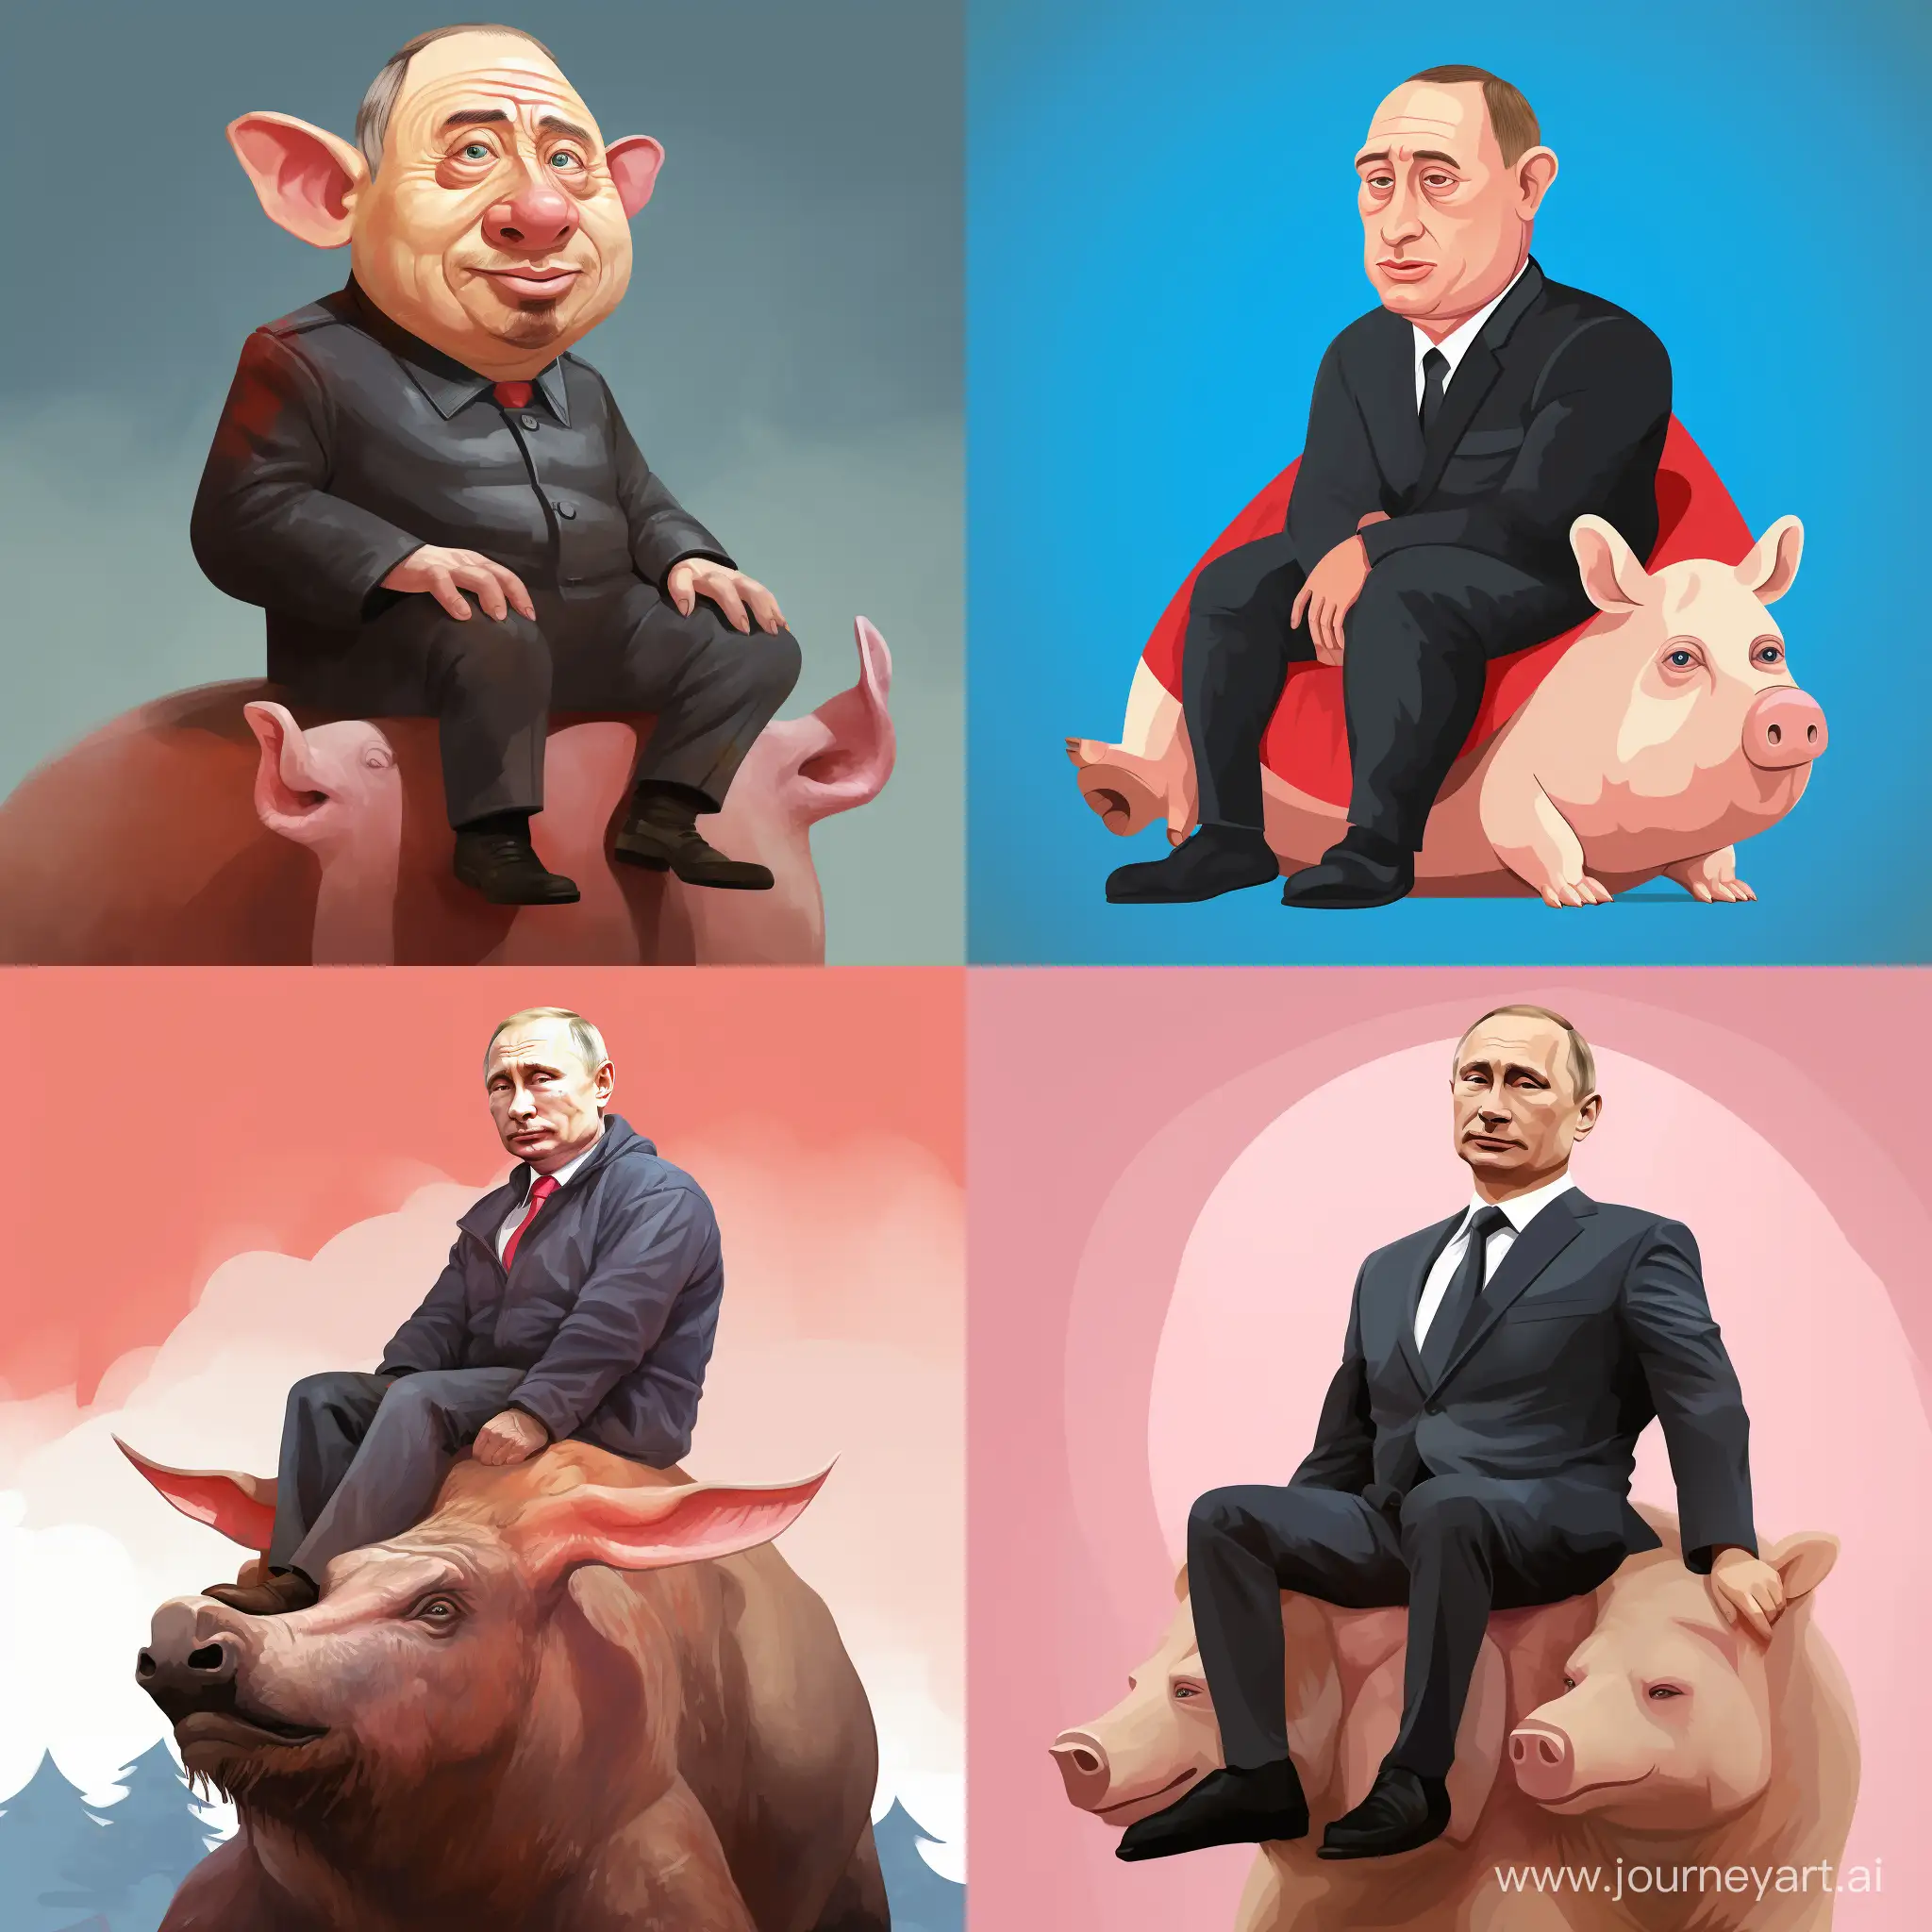 Vladimir-Putin-Cartoon-Playful-Illustration-with-Pig